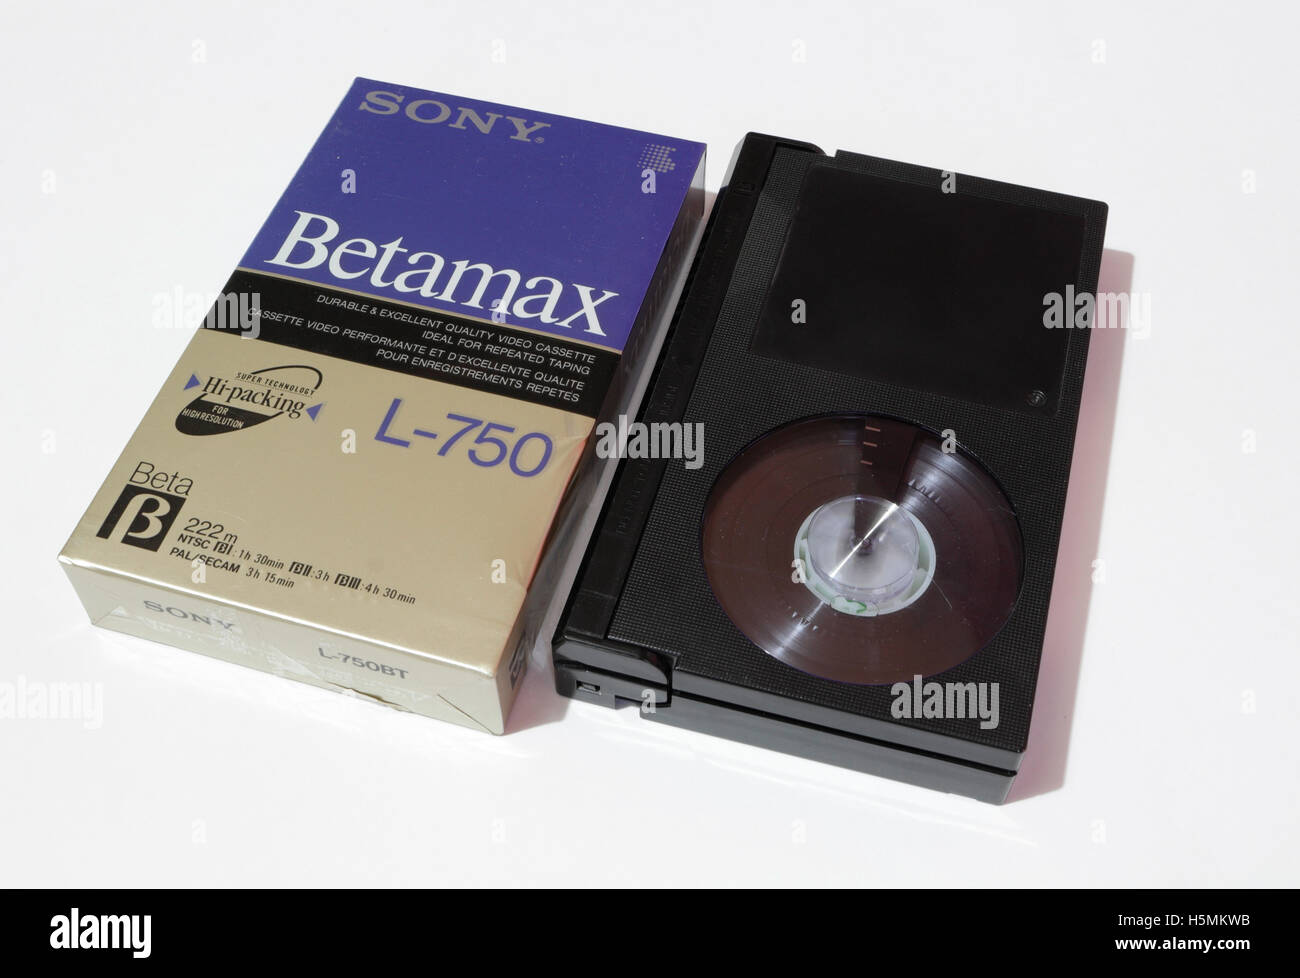 [Obrazek: sony-betamax-tape-and-packaging-H5MKWB.jpg]